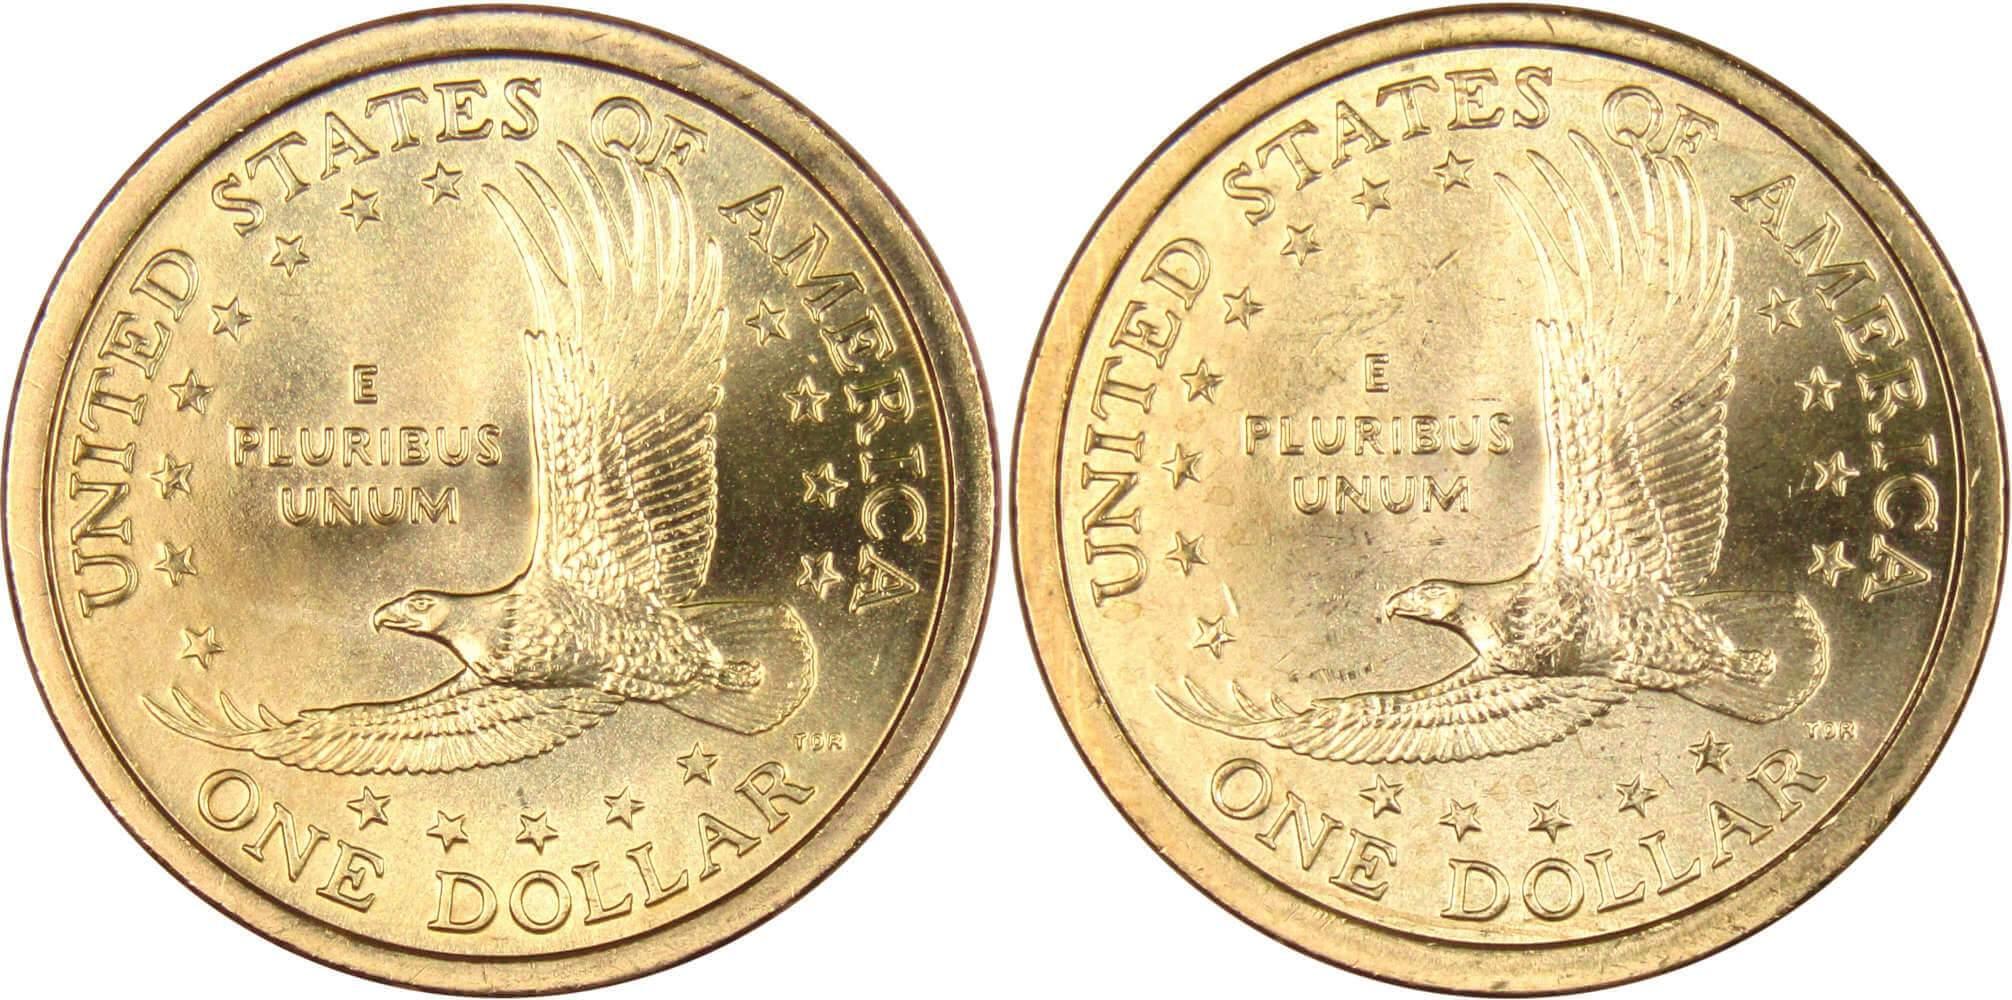 2002 P&D Sacagawea Native American Dollar 2 Coin Set BU Uncirculated $1